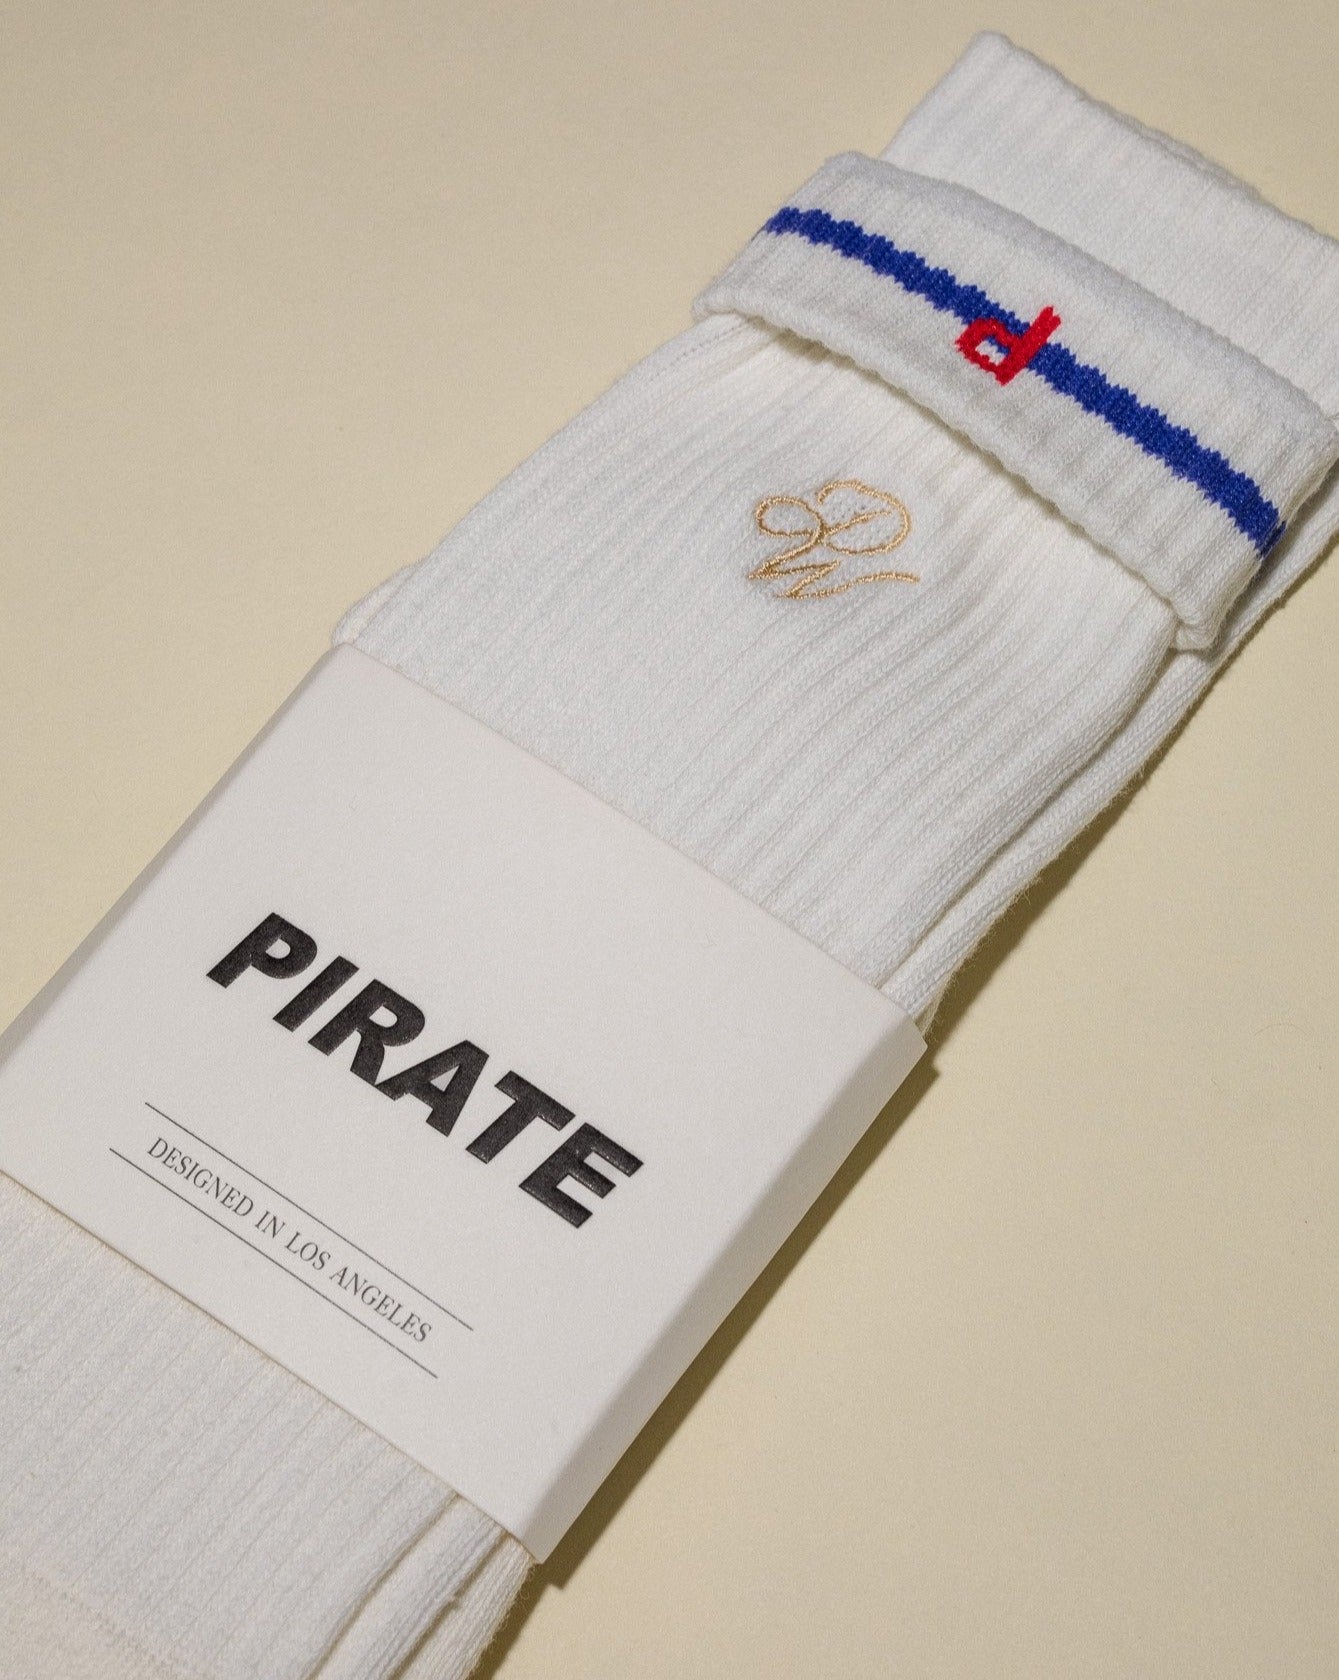 Pirate Hilltop "PW" Crew Sock (White)